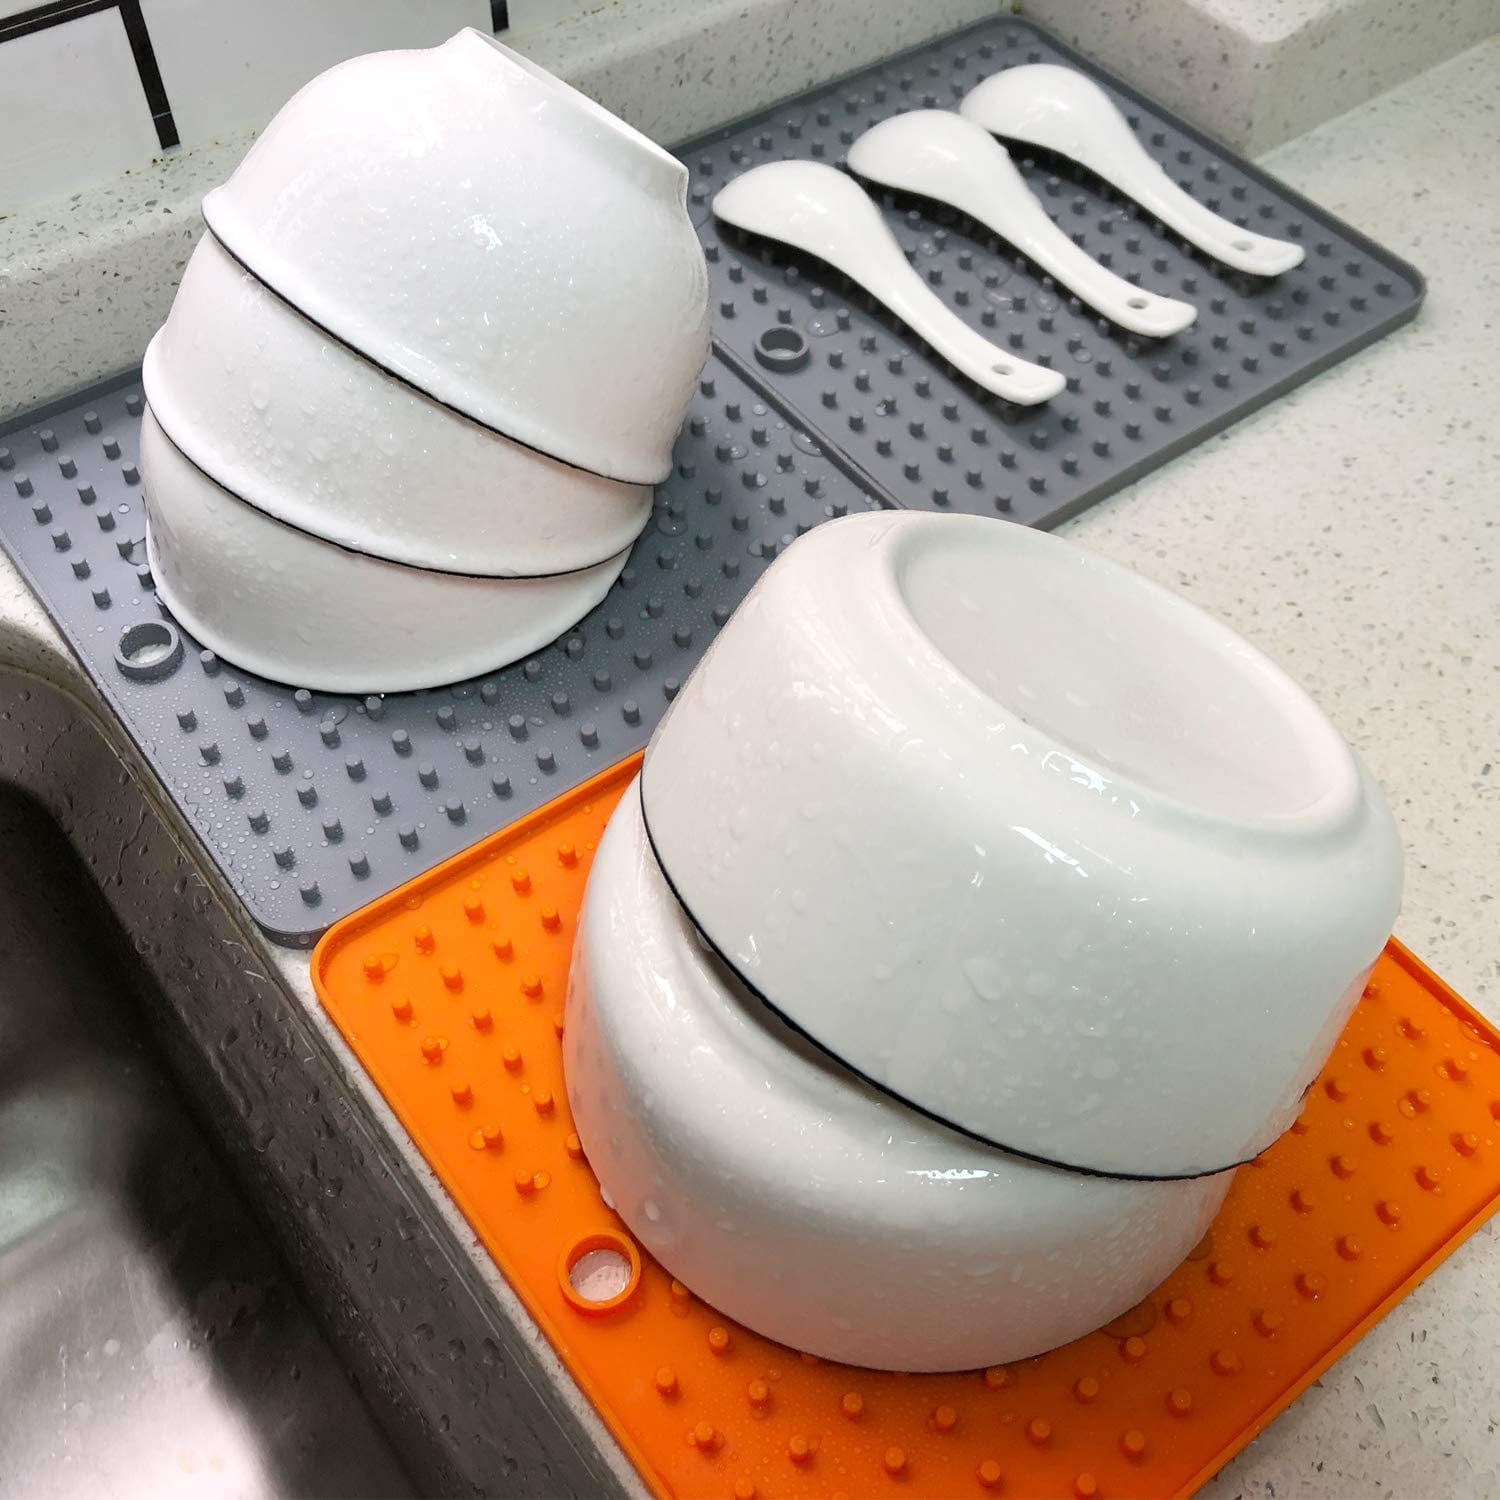 Walfos Silicone Trivet Mats - 4 Heat Resistant Pot Holders, Multipurpose  Non-Slip Hot Pads for Kitchen Potholders, Hot Dishers, Jar Opener, Spoon